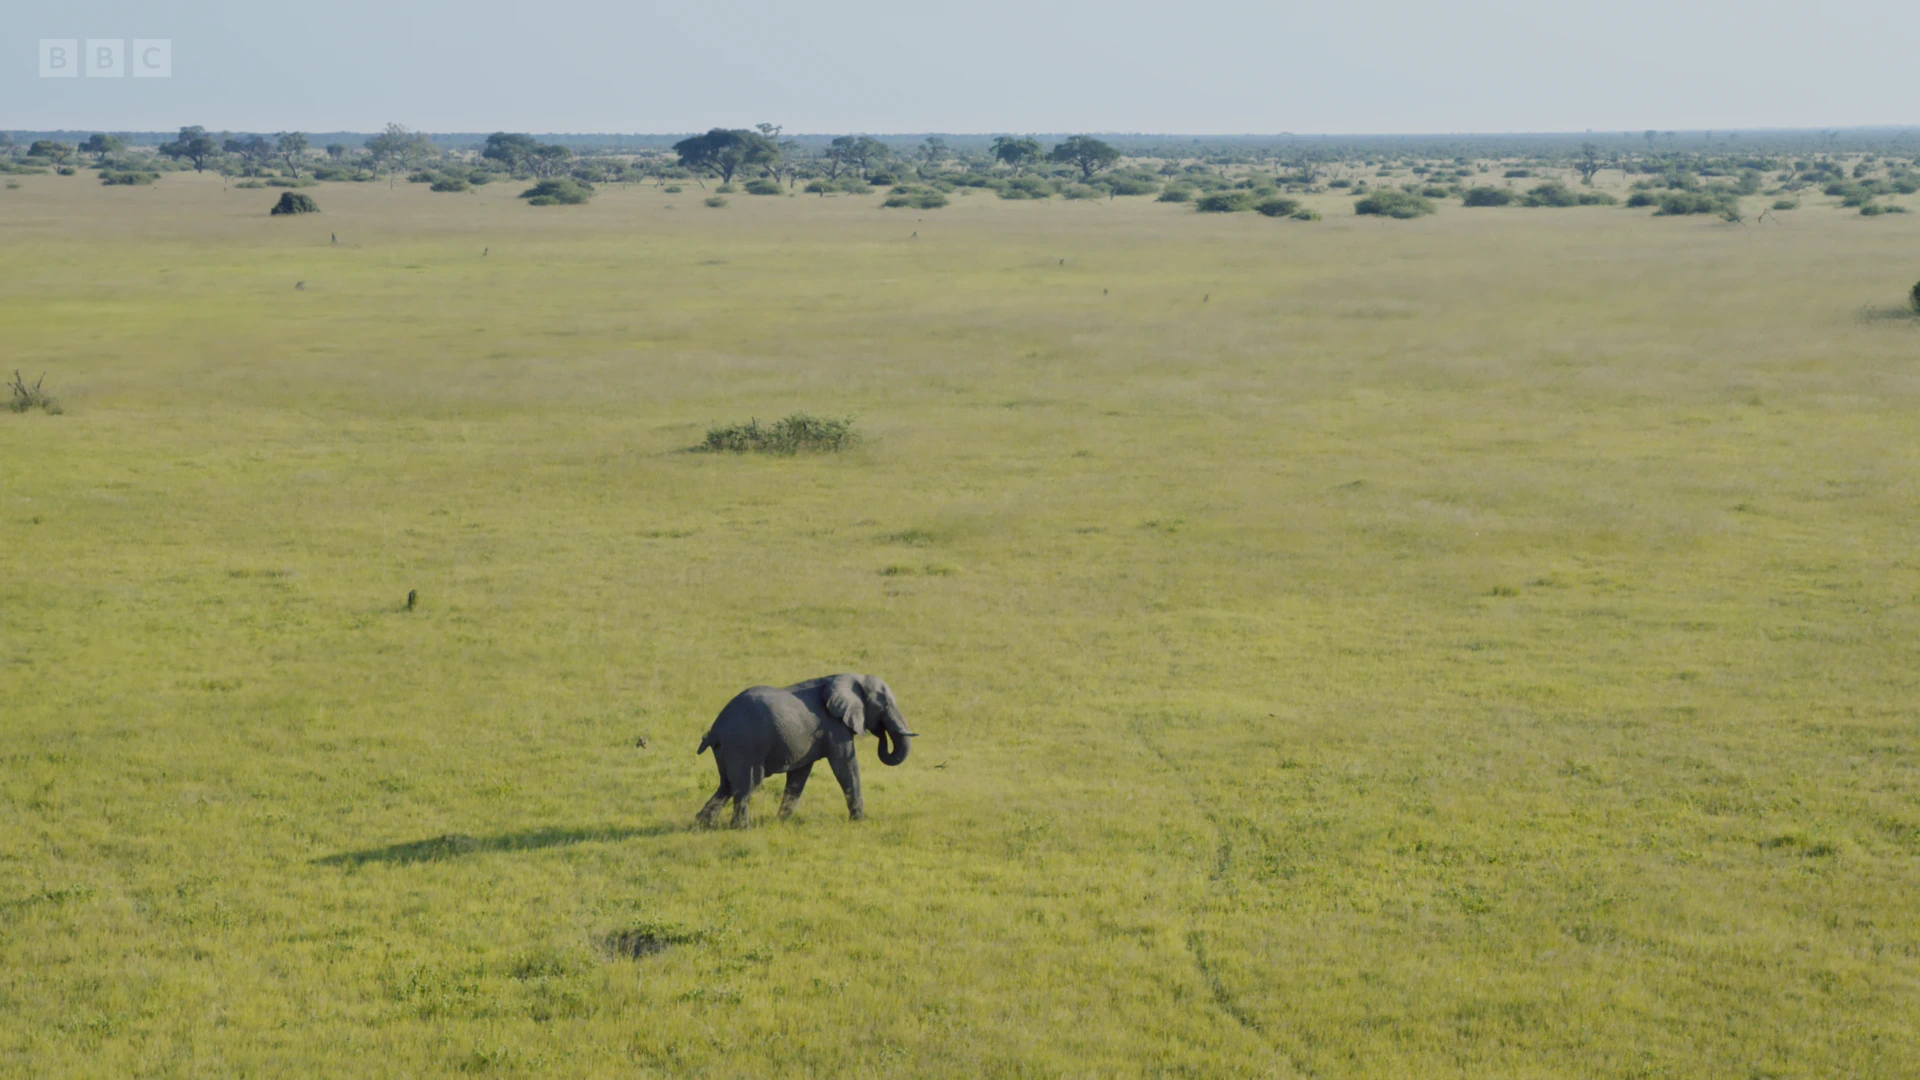 African bush elephant (Loxodonta africana) as shown in Planet Earth II - Grasslands